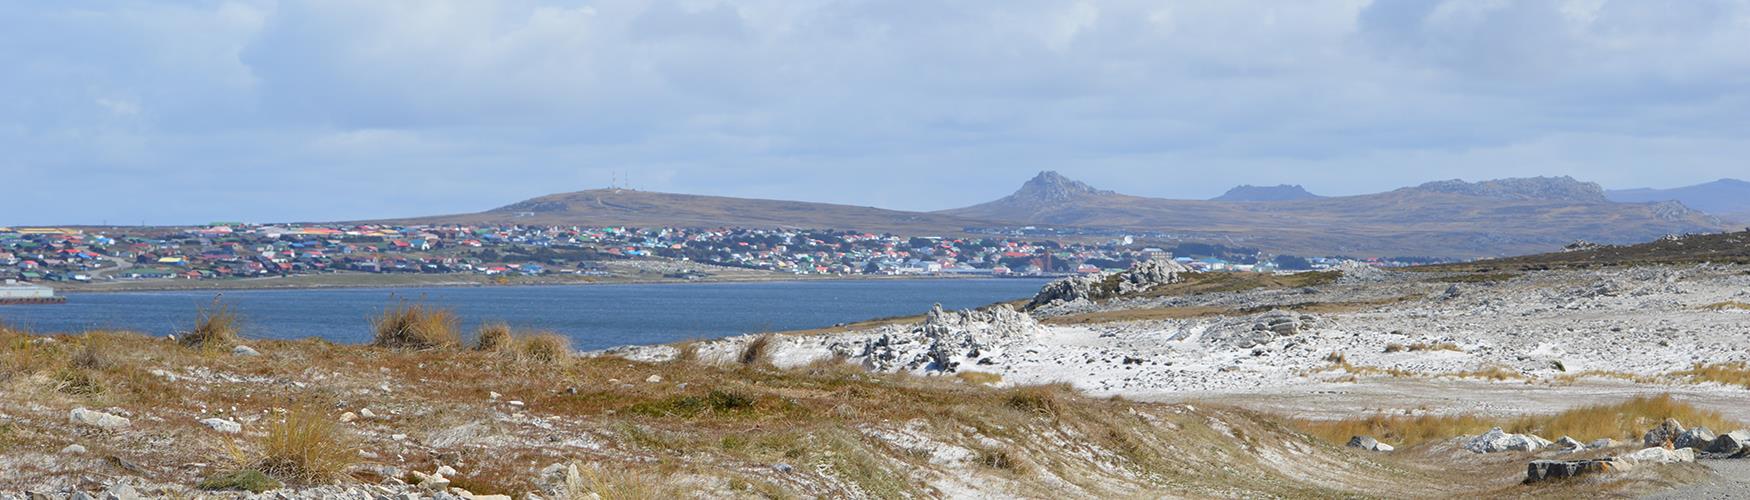 Stanley, Falkland Islands